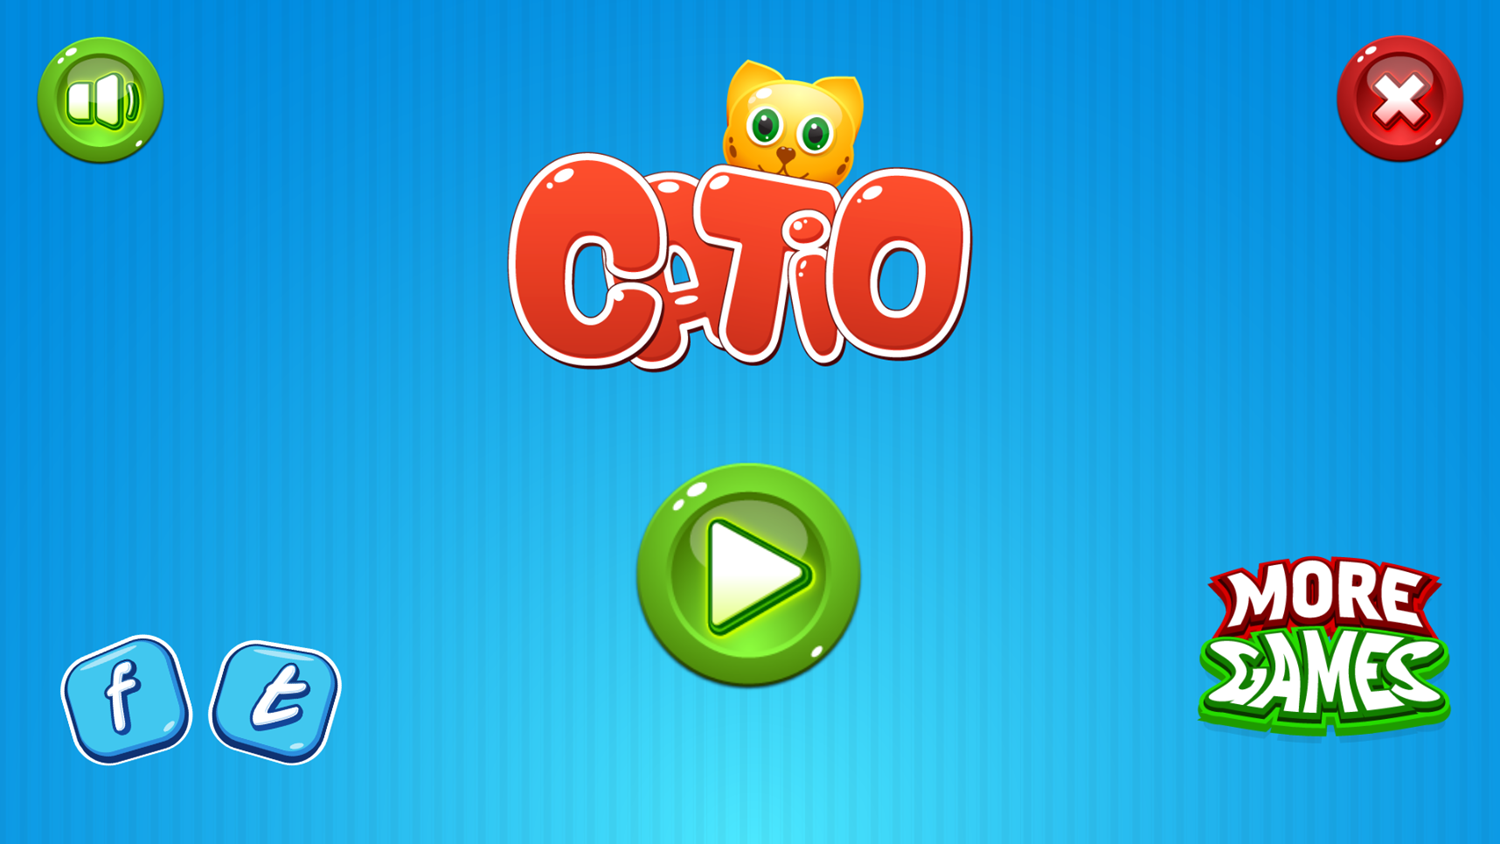 Catio Game Welcome Screen Screenshot.